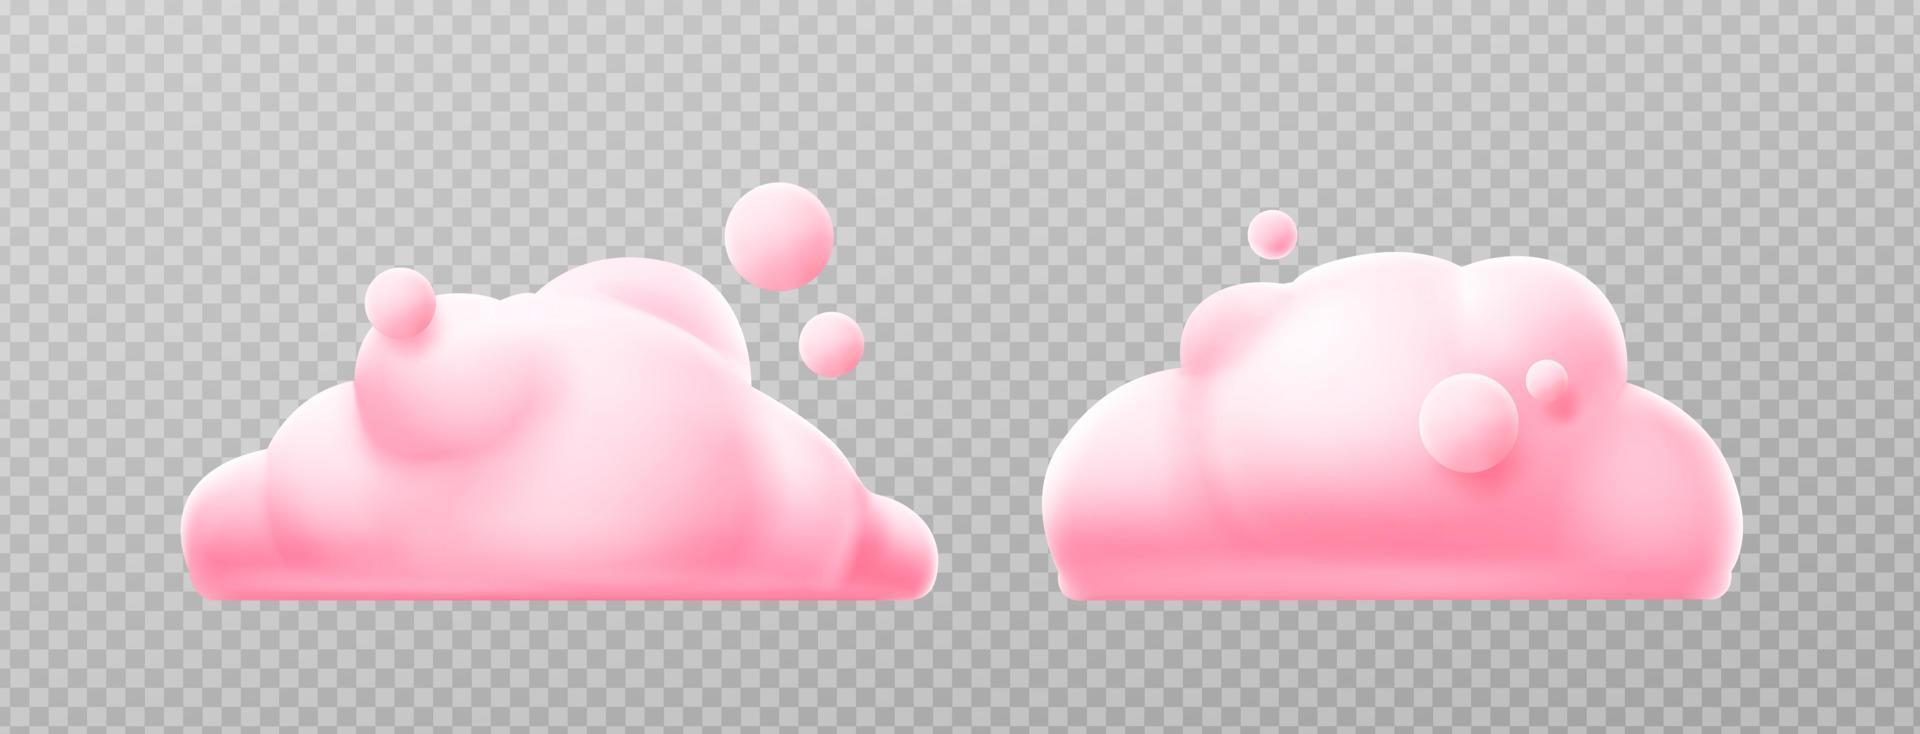 3D-Rendering rosa Wolken, flauschige Spindrift-Wirbel vektor